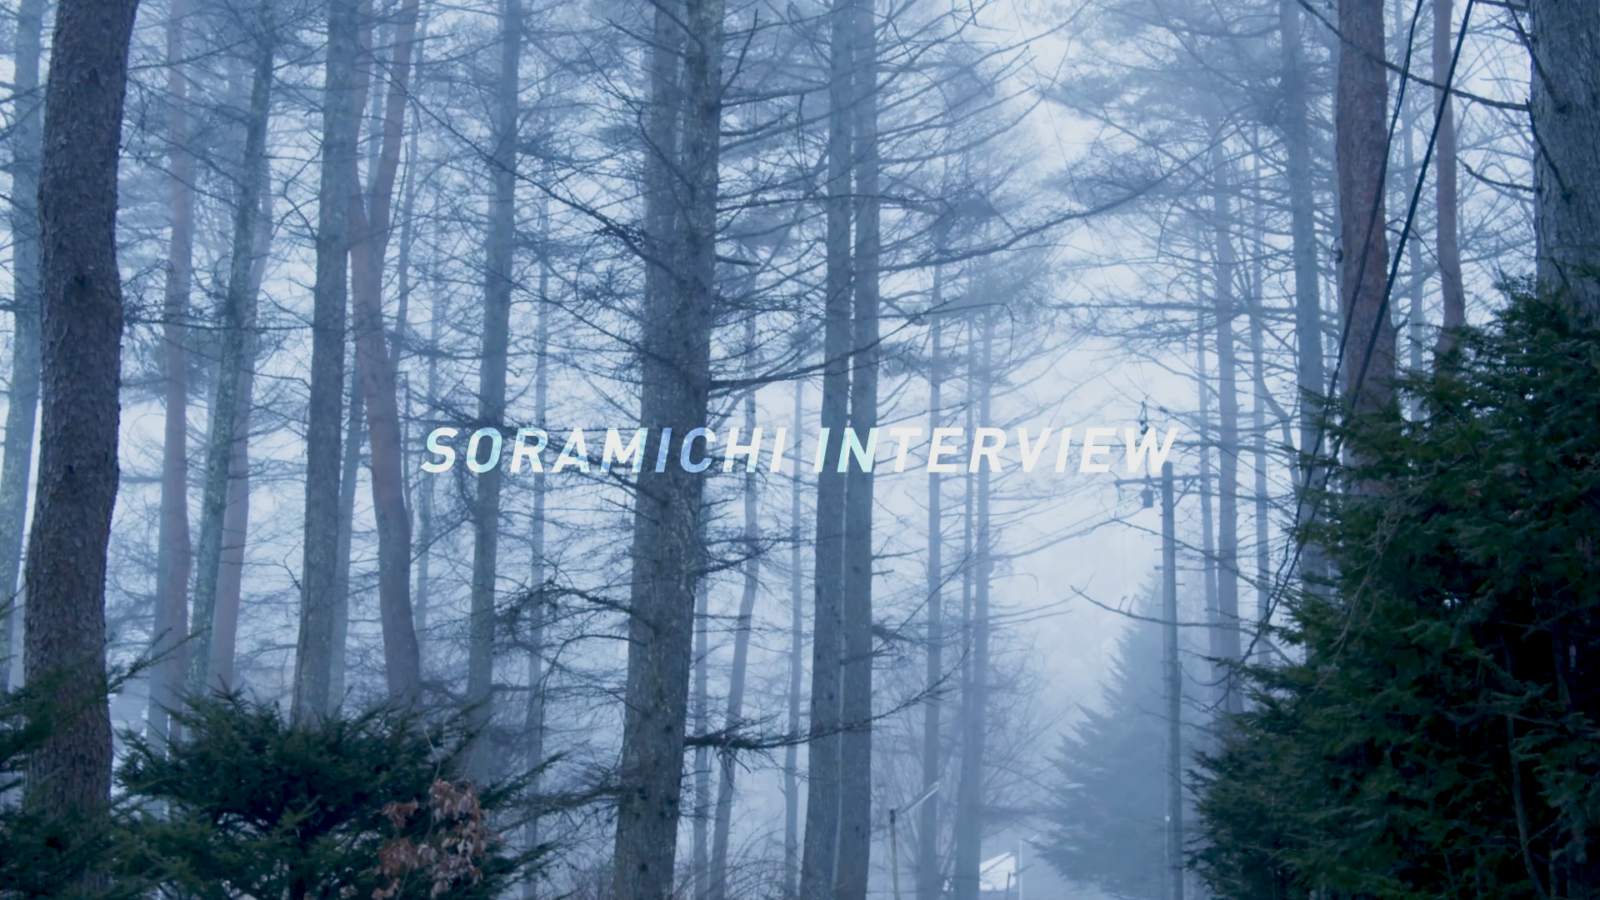 SORAMICHI interview